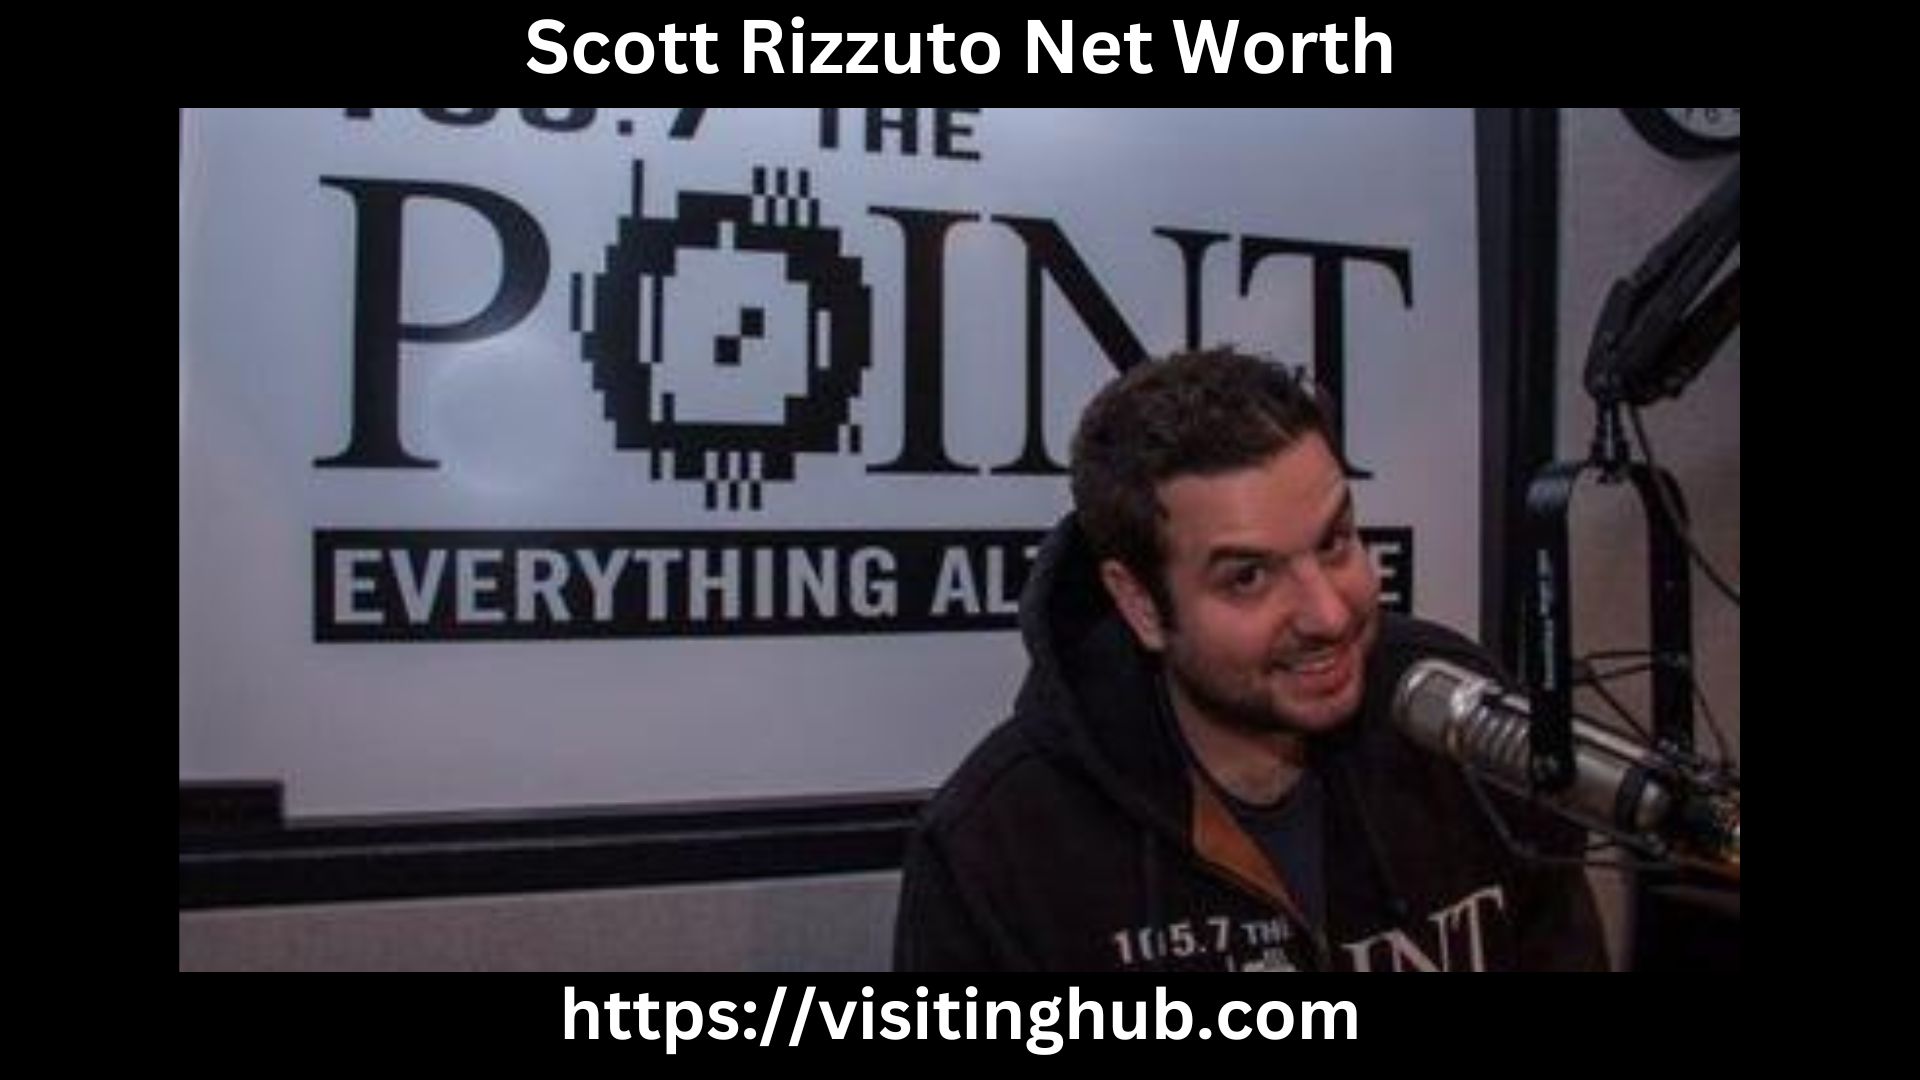 Scott Rizzuto Net Worth